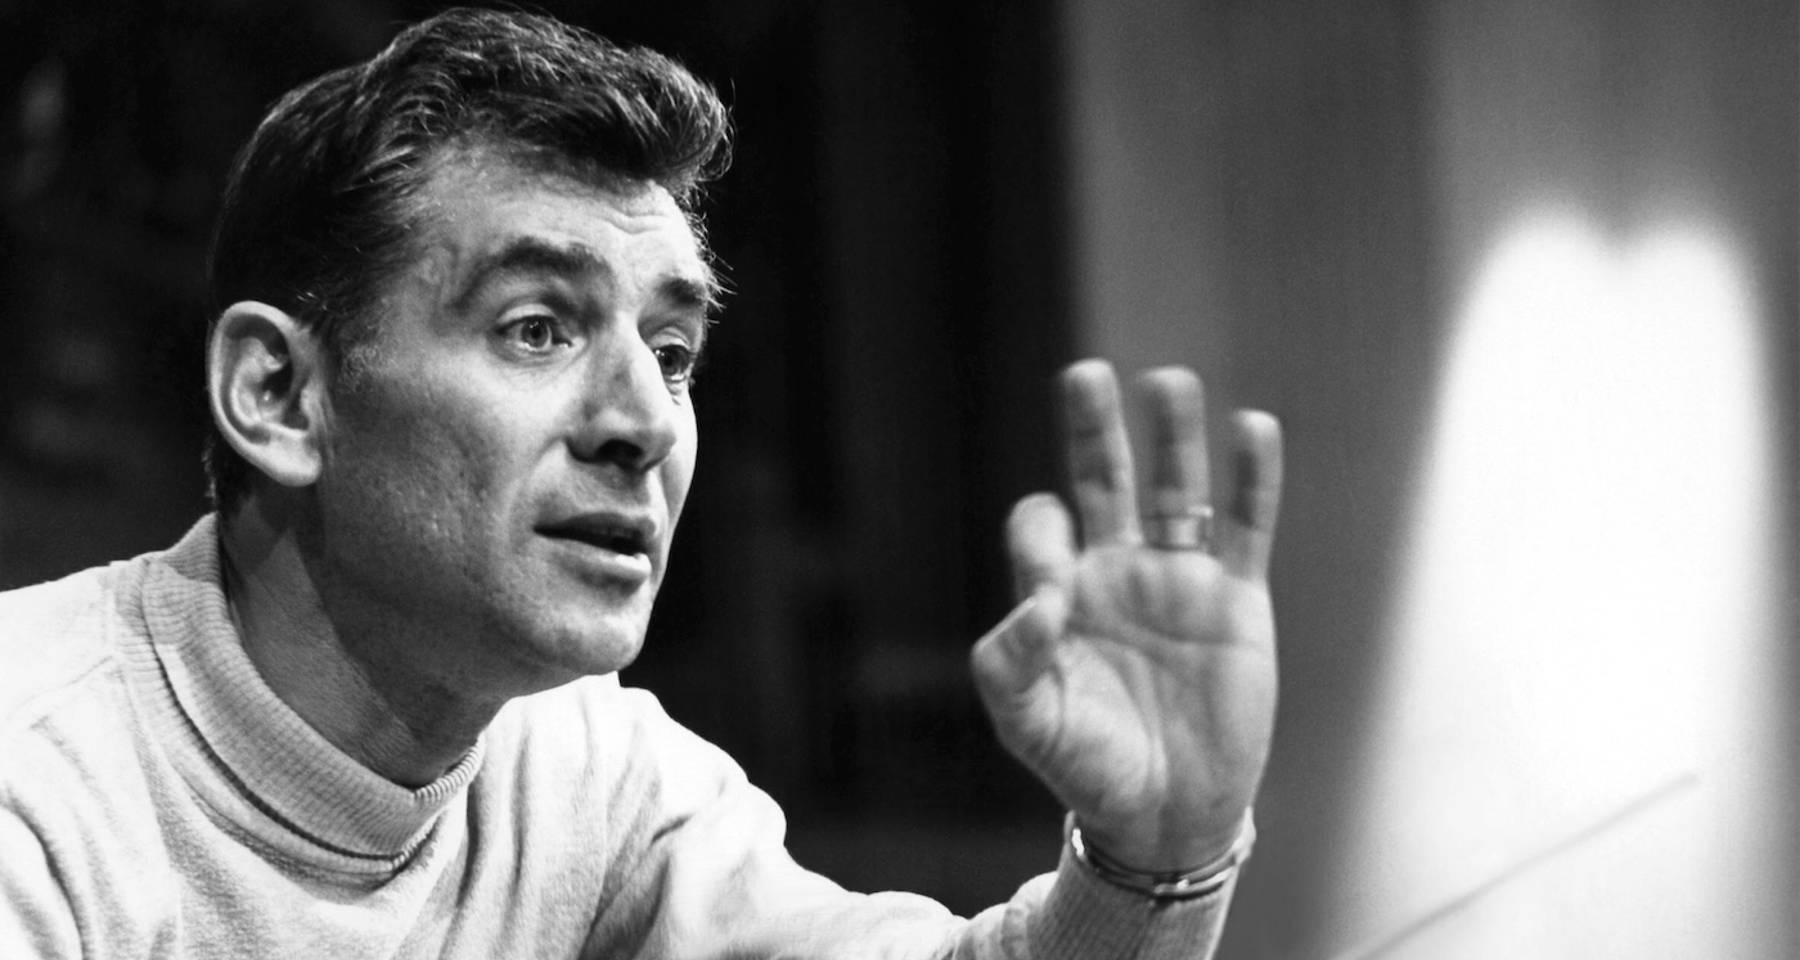 Maestro - MusicTalks Tributes the life and music of Leonard Bernstein